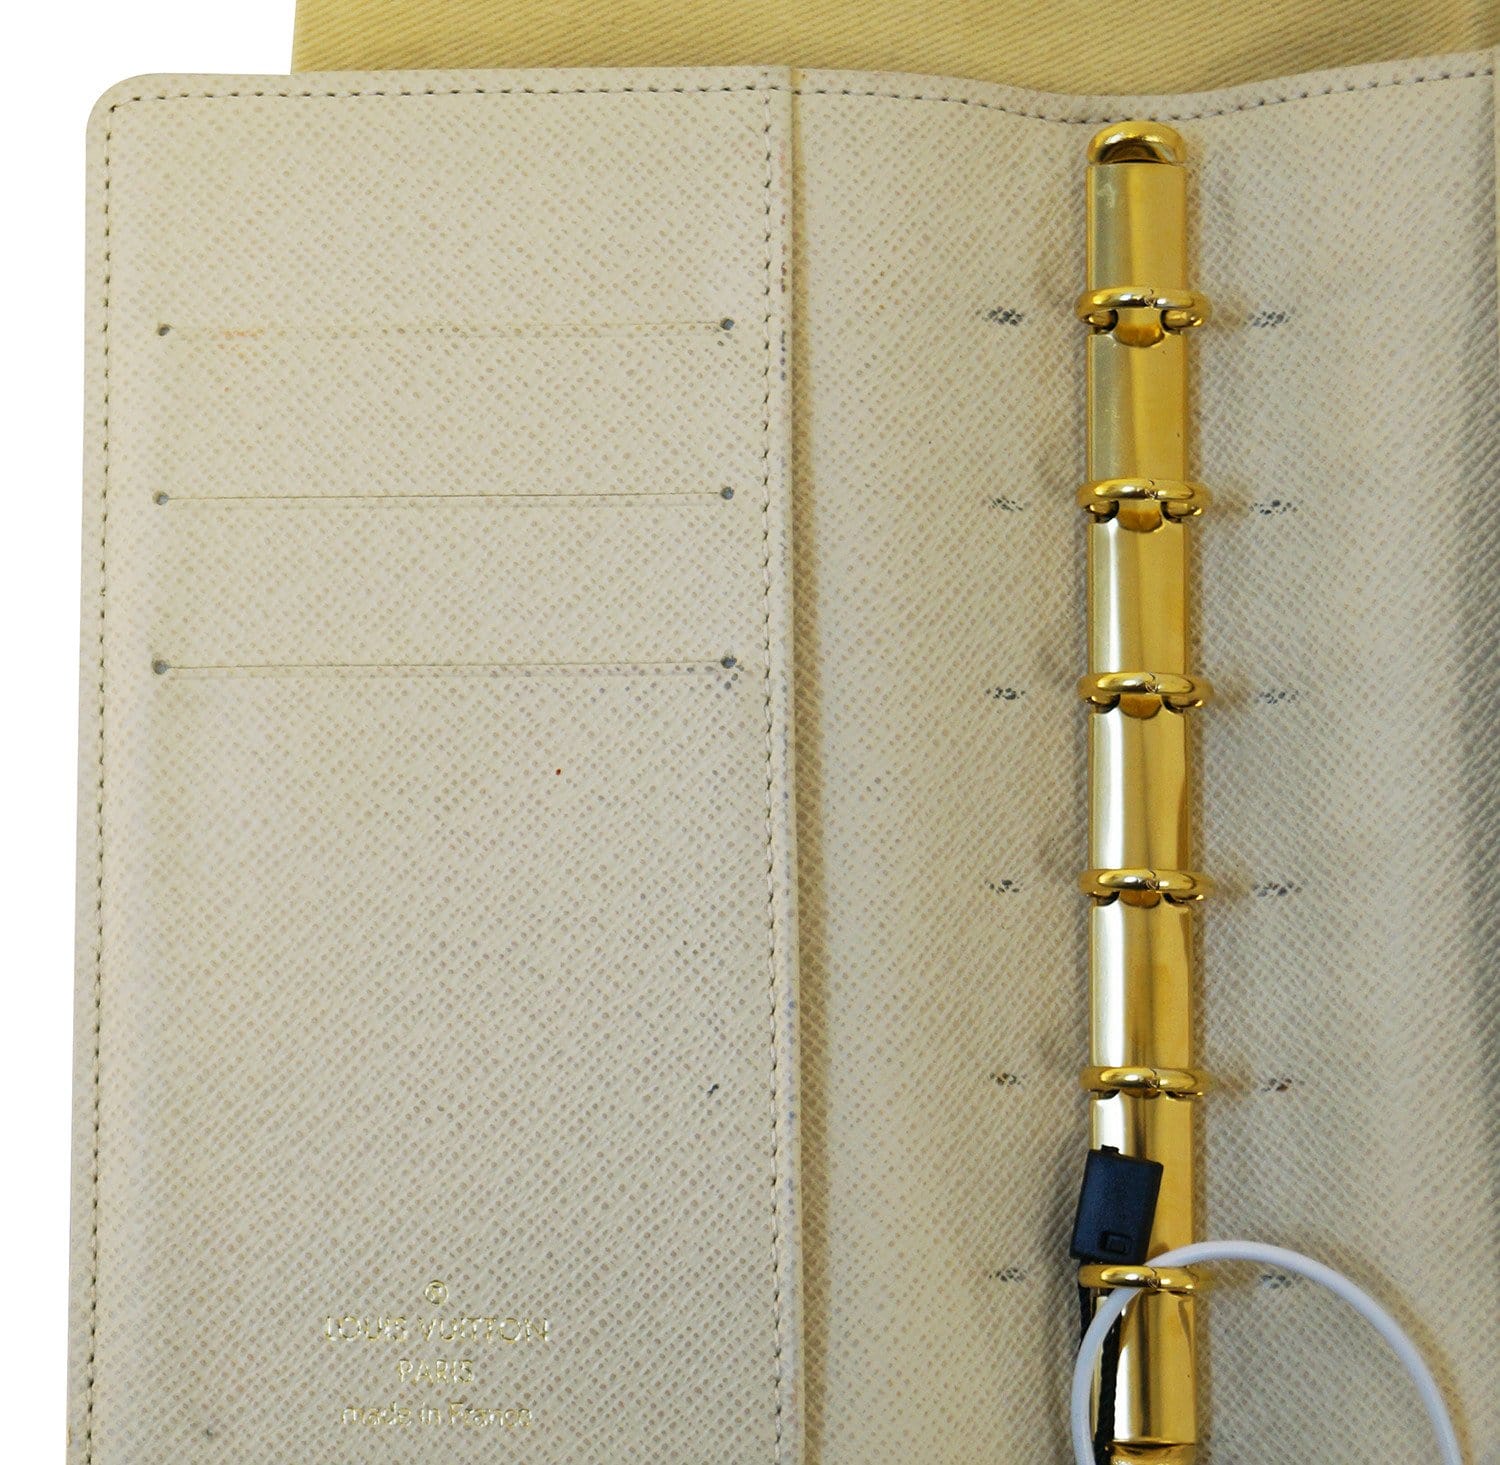 Authentic Louis Vuitton Damier Agenda PM Notebook Cover R20700 LV